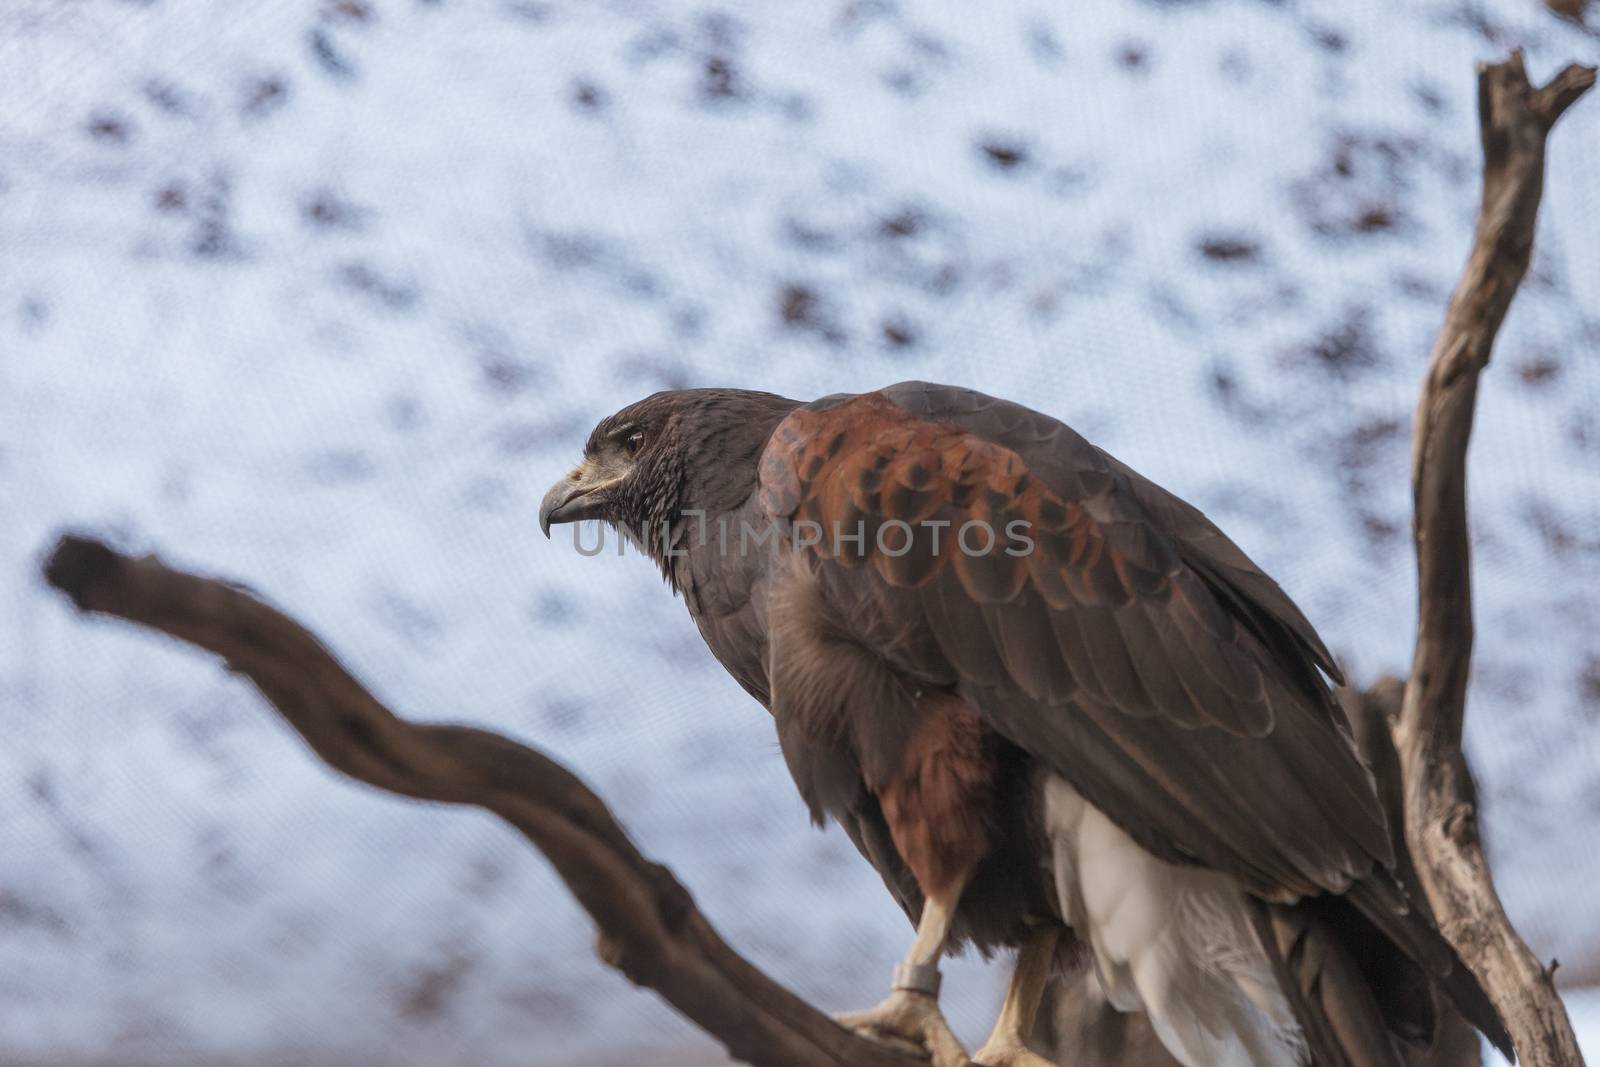 Harris’ Hawk, Parabuteo unicinctus harrisi, is a bird of prey that is also called the bay-winged hawk